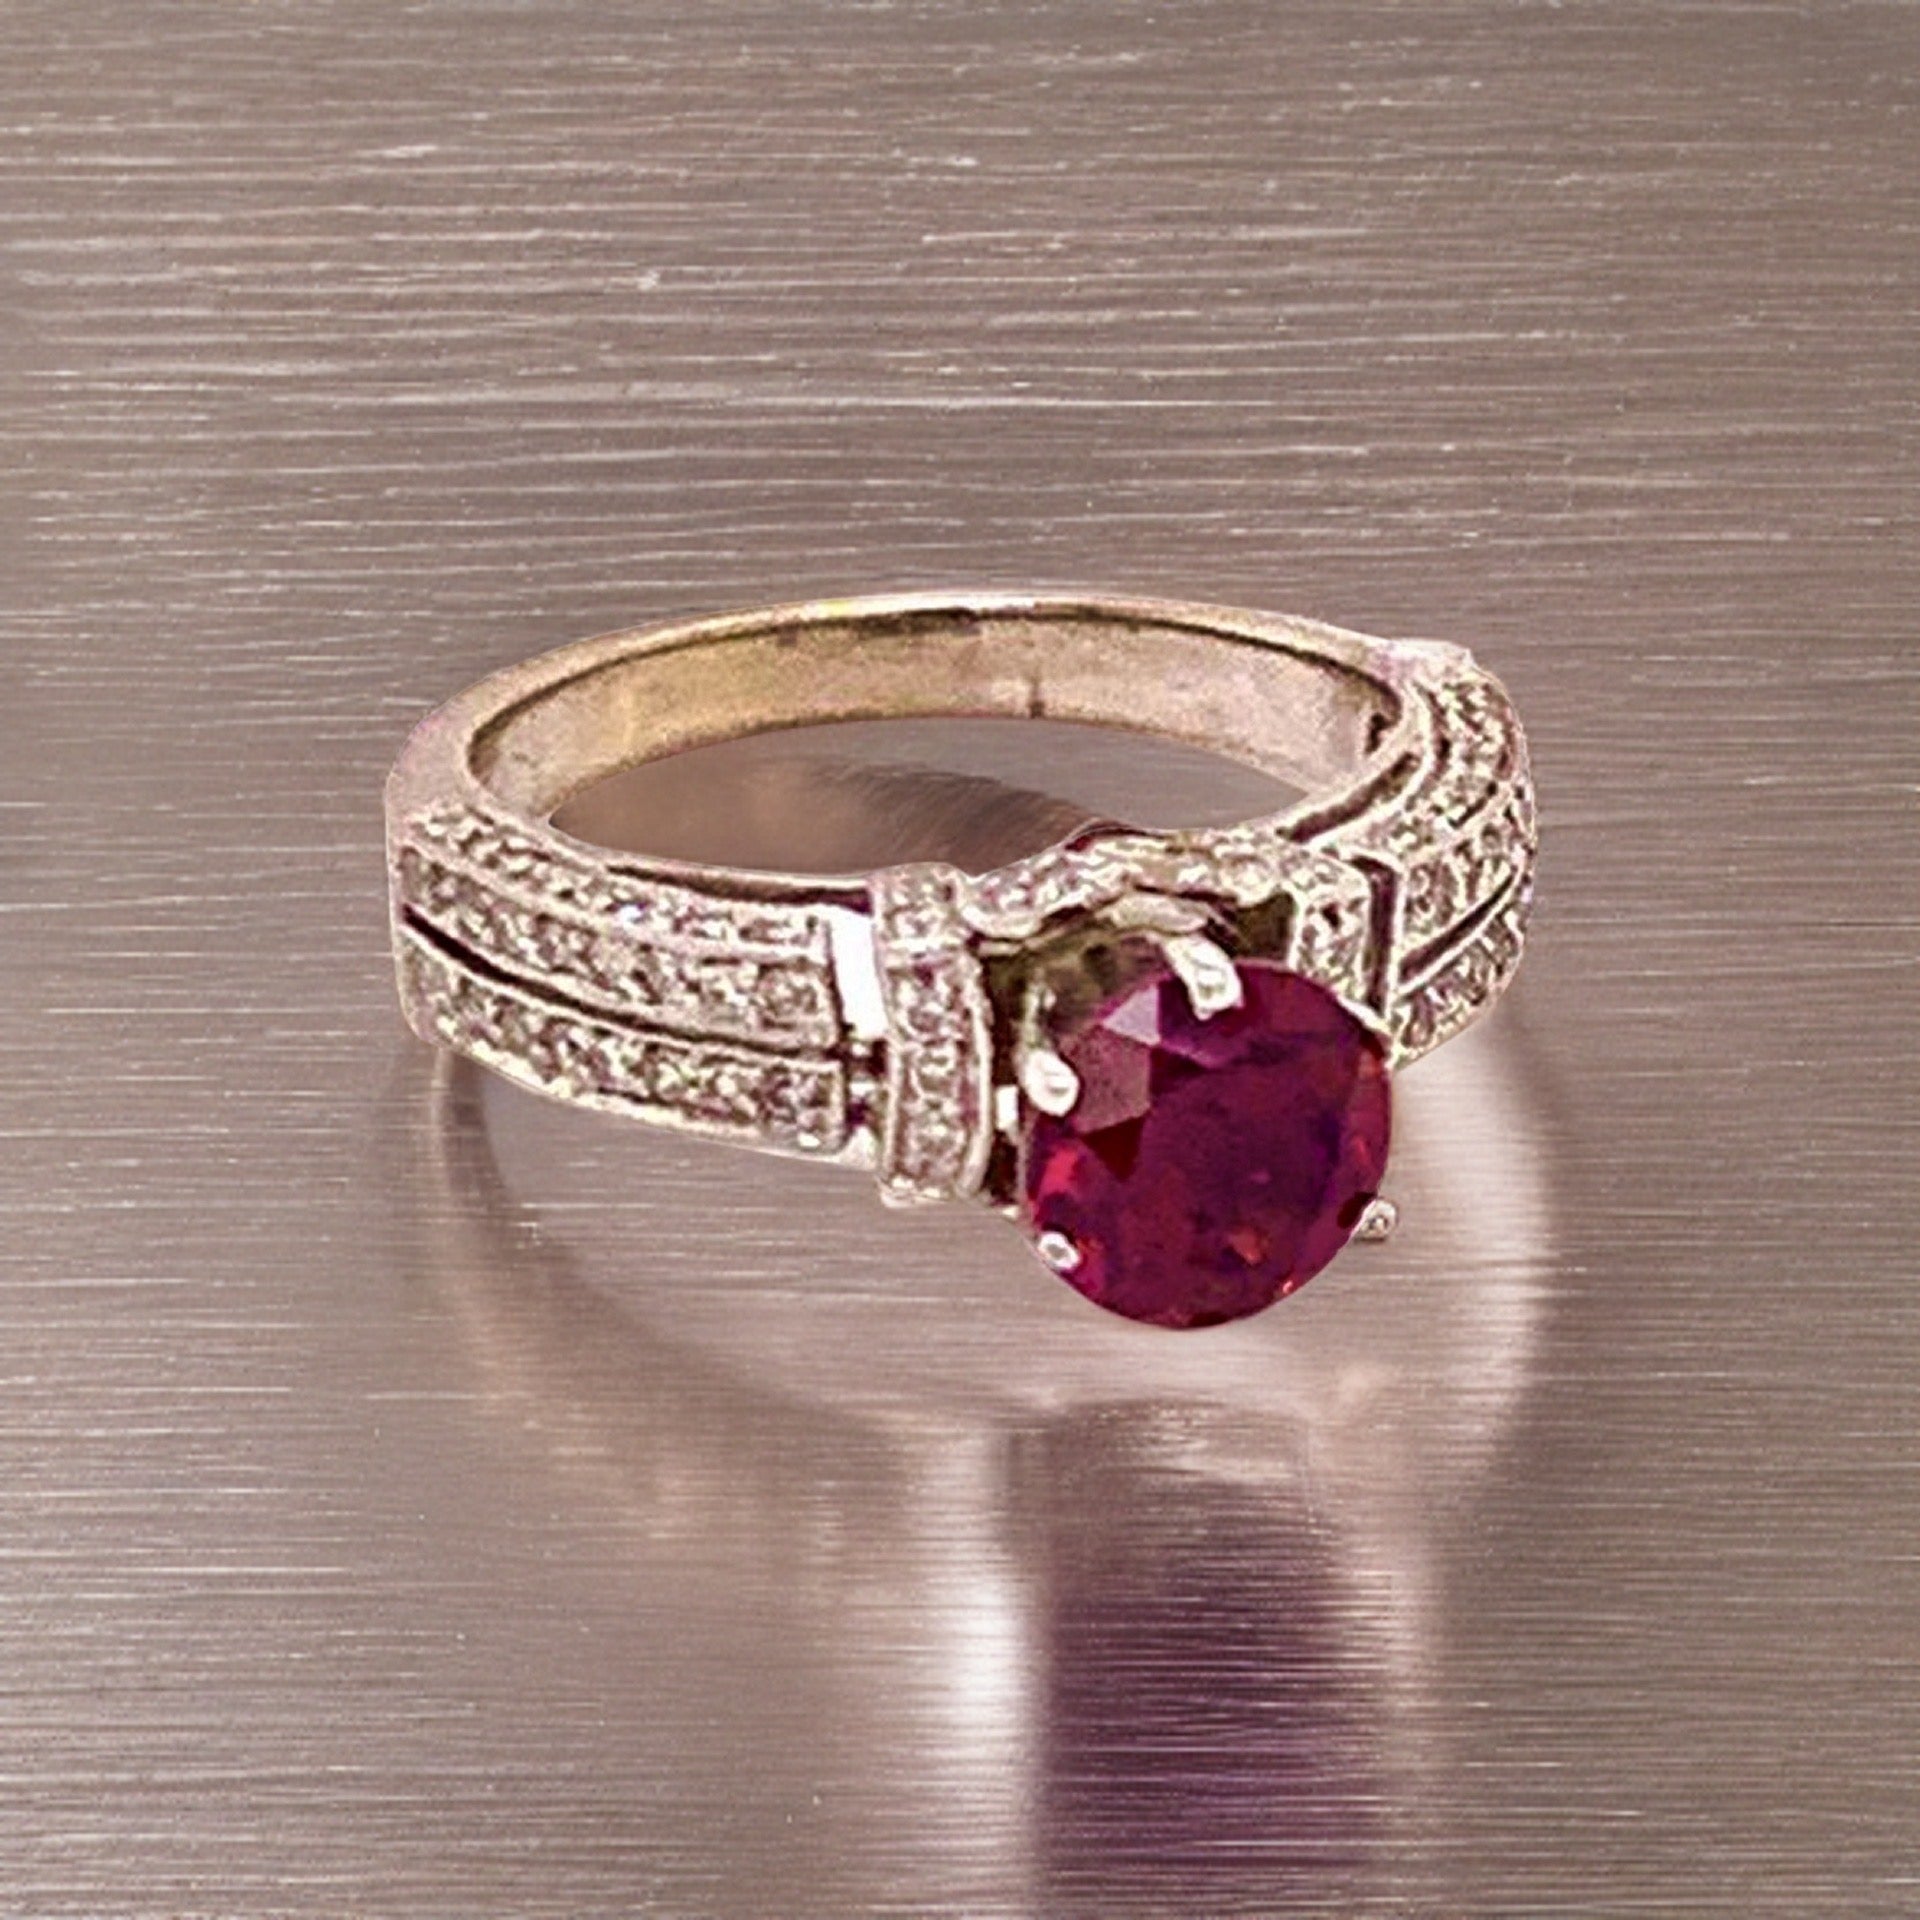 Diamond Tourmaline Rubellite Ring 4.5 14k Gold 1.38 TCW Women Certified $1,950 910744 - Certified Fine Jewelry